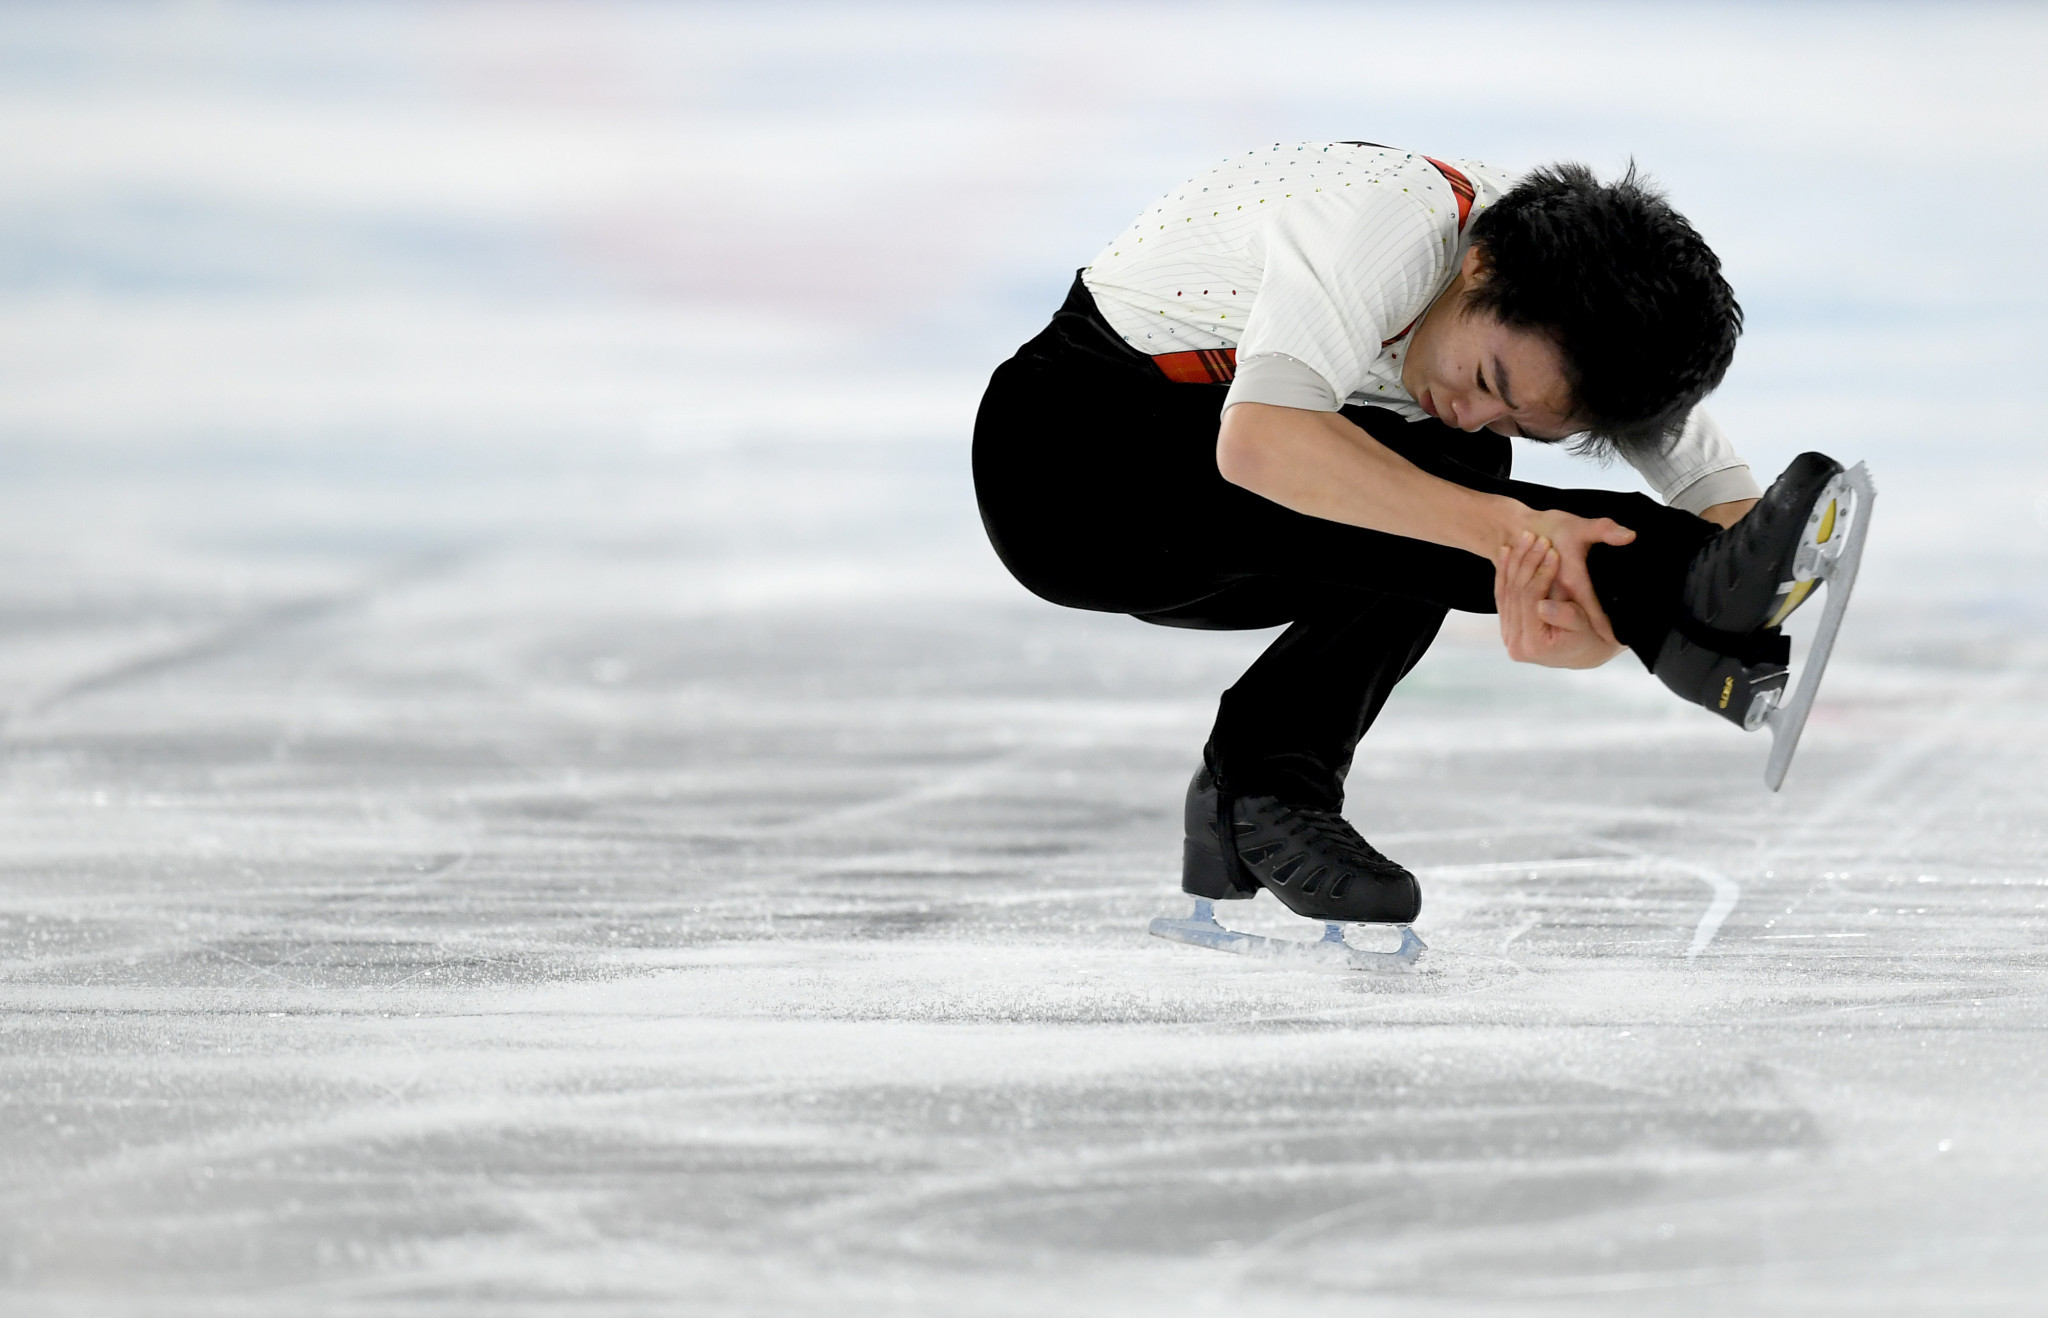 Flawless free programme earns Kagiyama figure skating title at Lausanne 2020